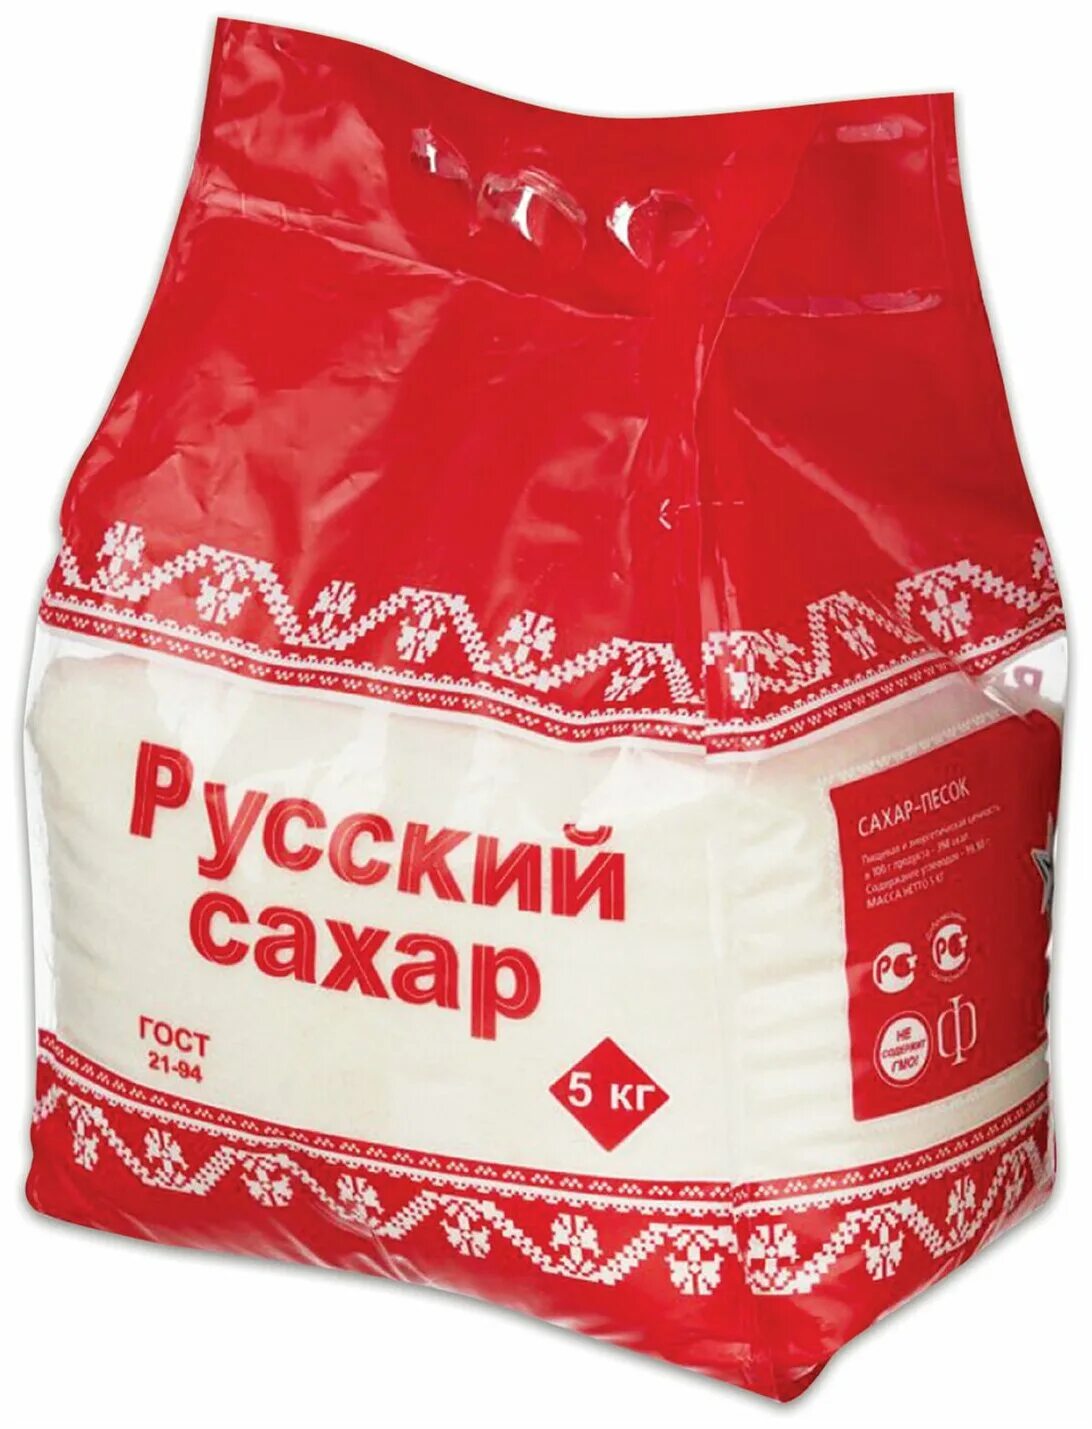 Сахар-песок русский сахар, 1кг. Сахар-песок русский сахар 5кг. Русский сахар 1 кг. Сахар русский сахар 5 кг.